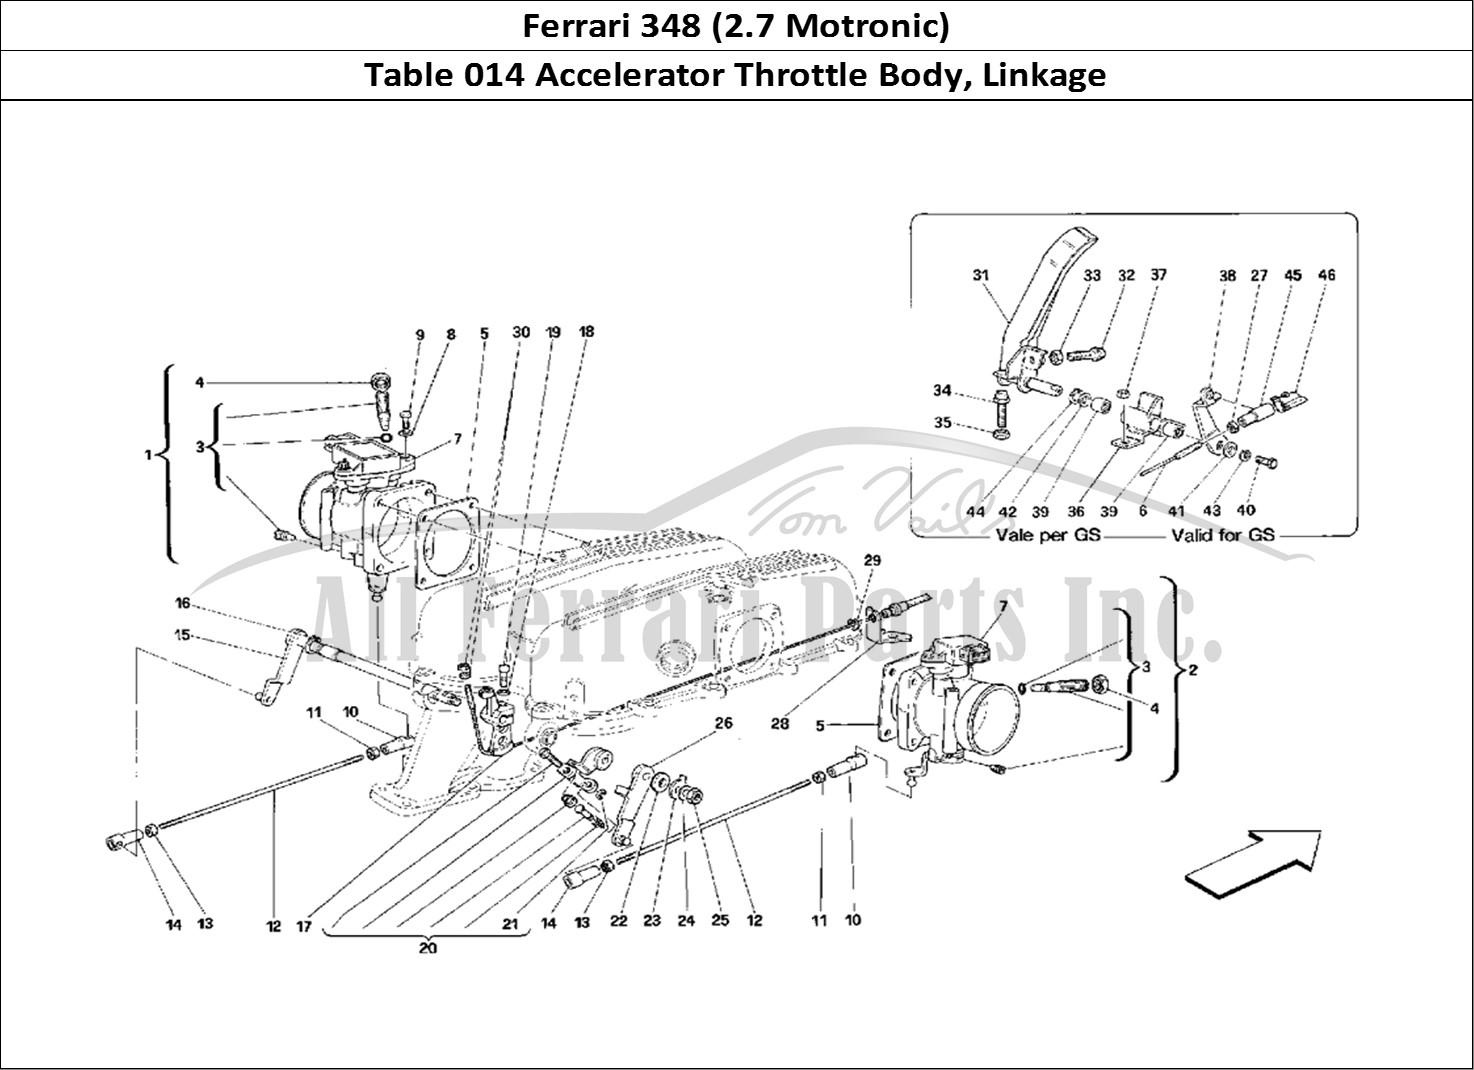 Ferrari Parts Ferrari 348 (2.7 Motronic) Page 014 Throttle Housing and Link